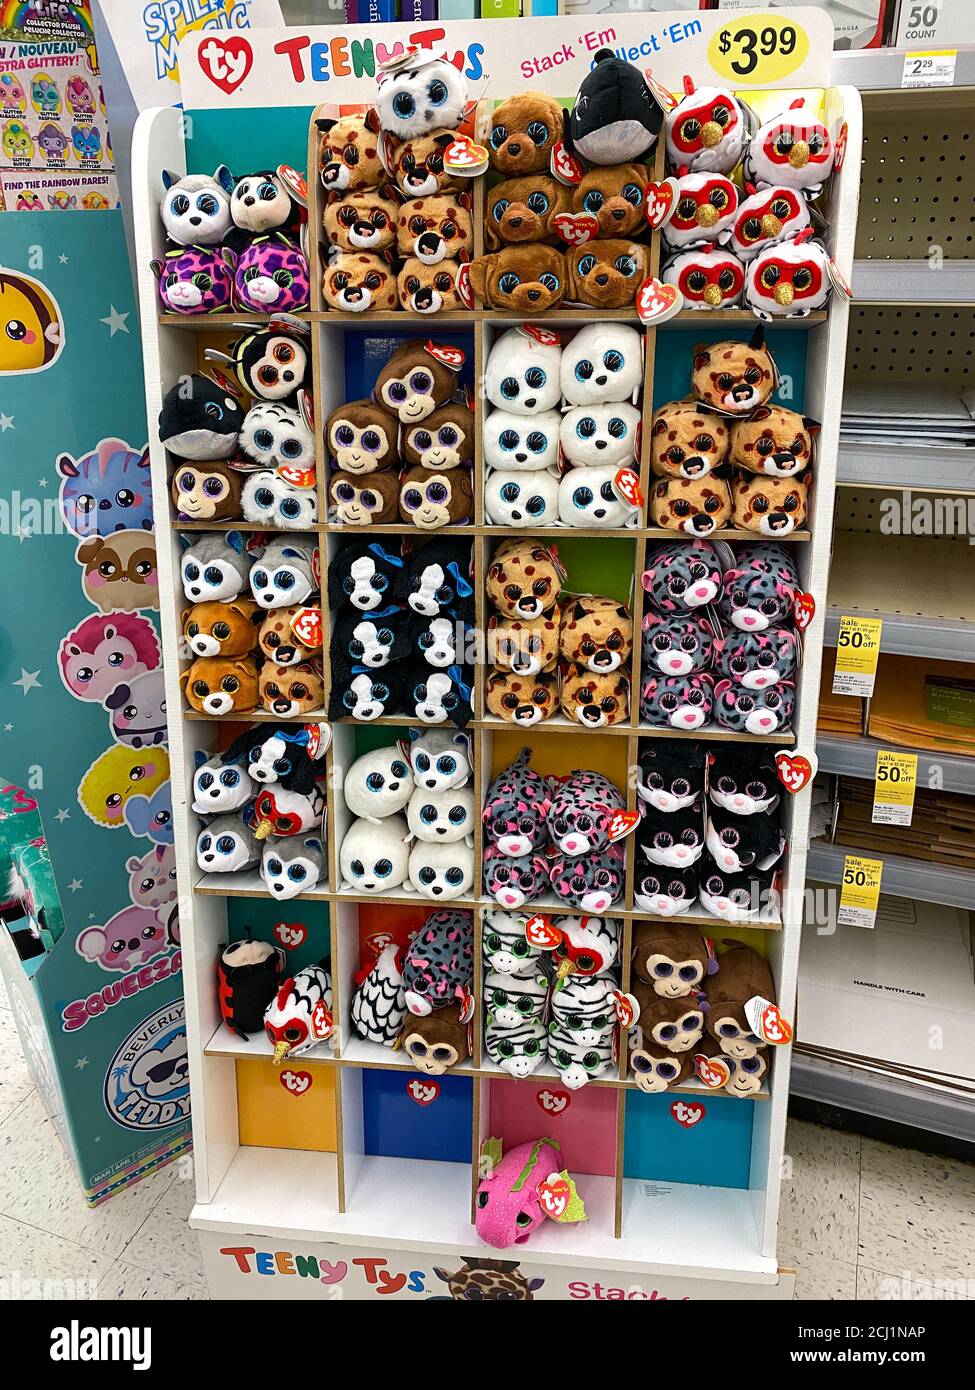 Orlando, FL/USA-5/8/20: A cute display of TY plush stuffed animals at a Walgreens drug store in Orlando, Florida. Stock Photo